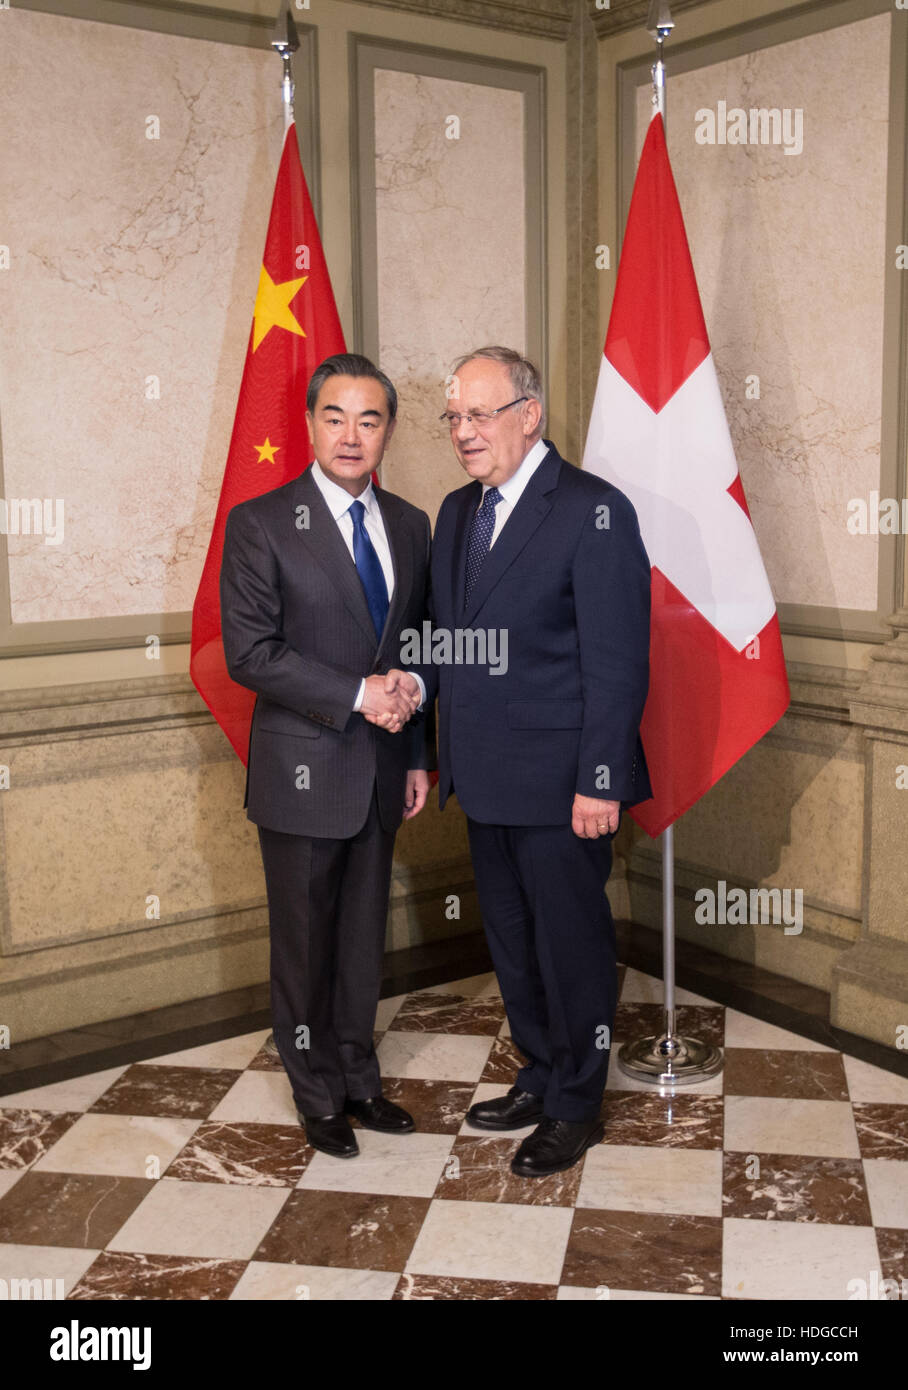 Bern, Switzerland. 12th Dec, 2016. Chinese Foreign Minister Wang Yi (L) shakes hands with Swiss President Johann Schneider-Ammann in Bern, Switzerland, on Dec. 12, 2016. © Xu Jinquan/Xinhua/Alamy Live News Stock Photo